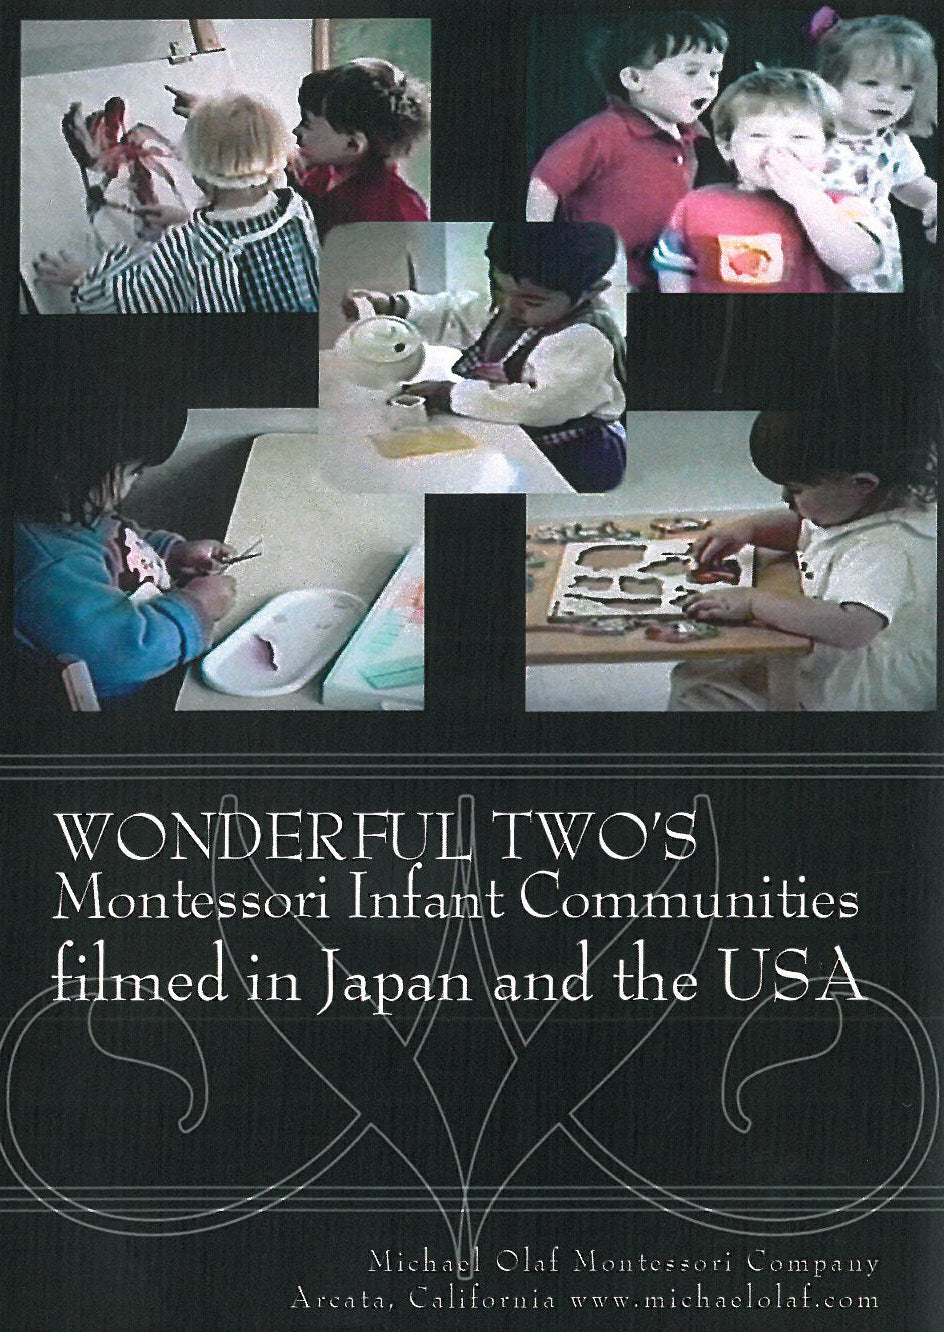 The Wonderful Twos DVD